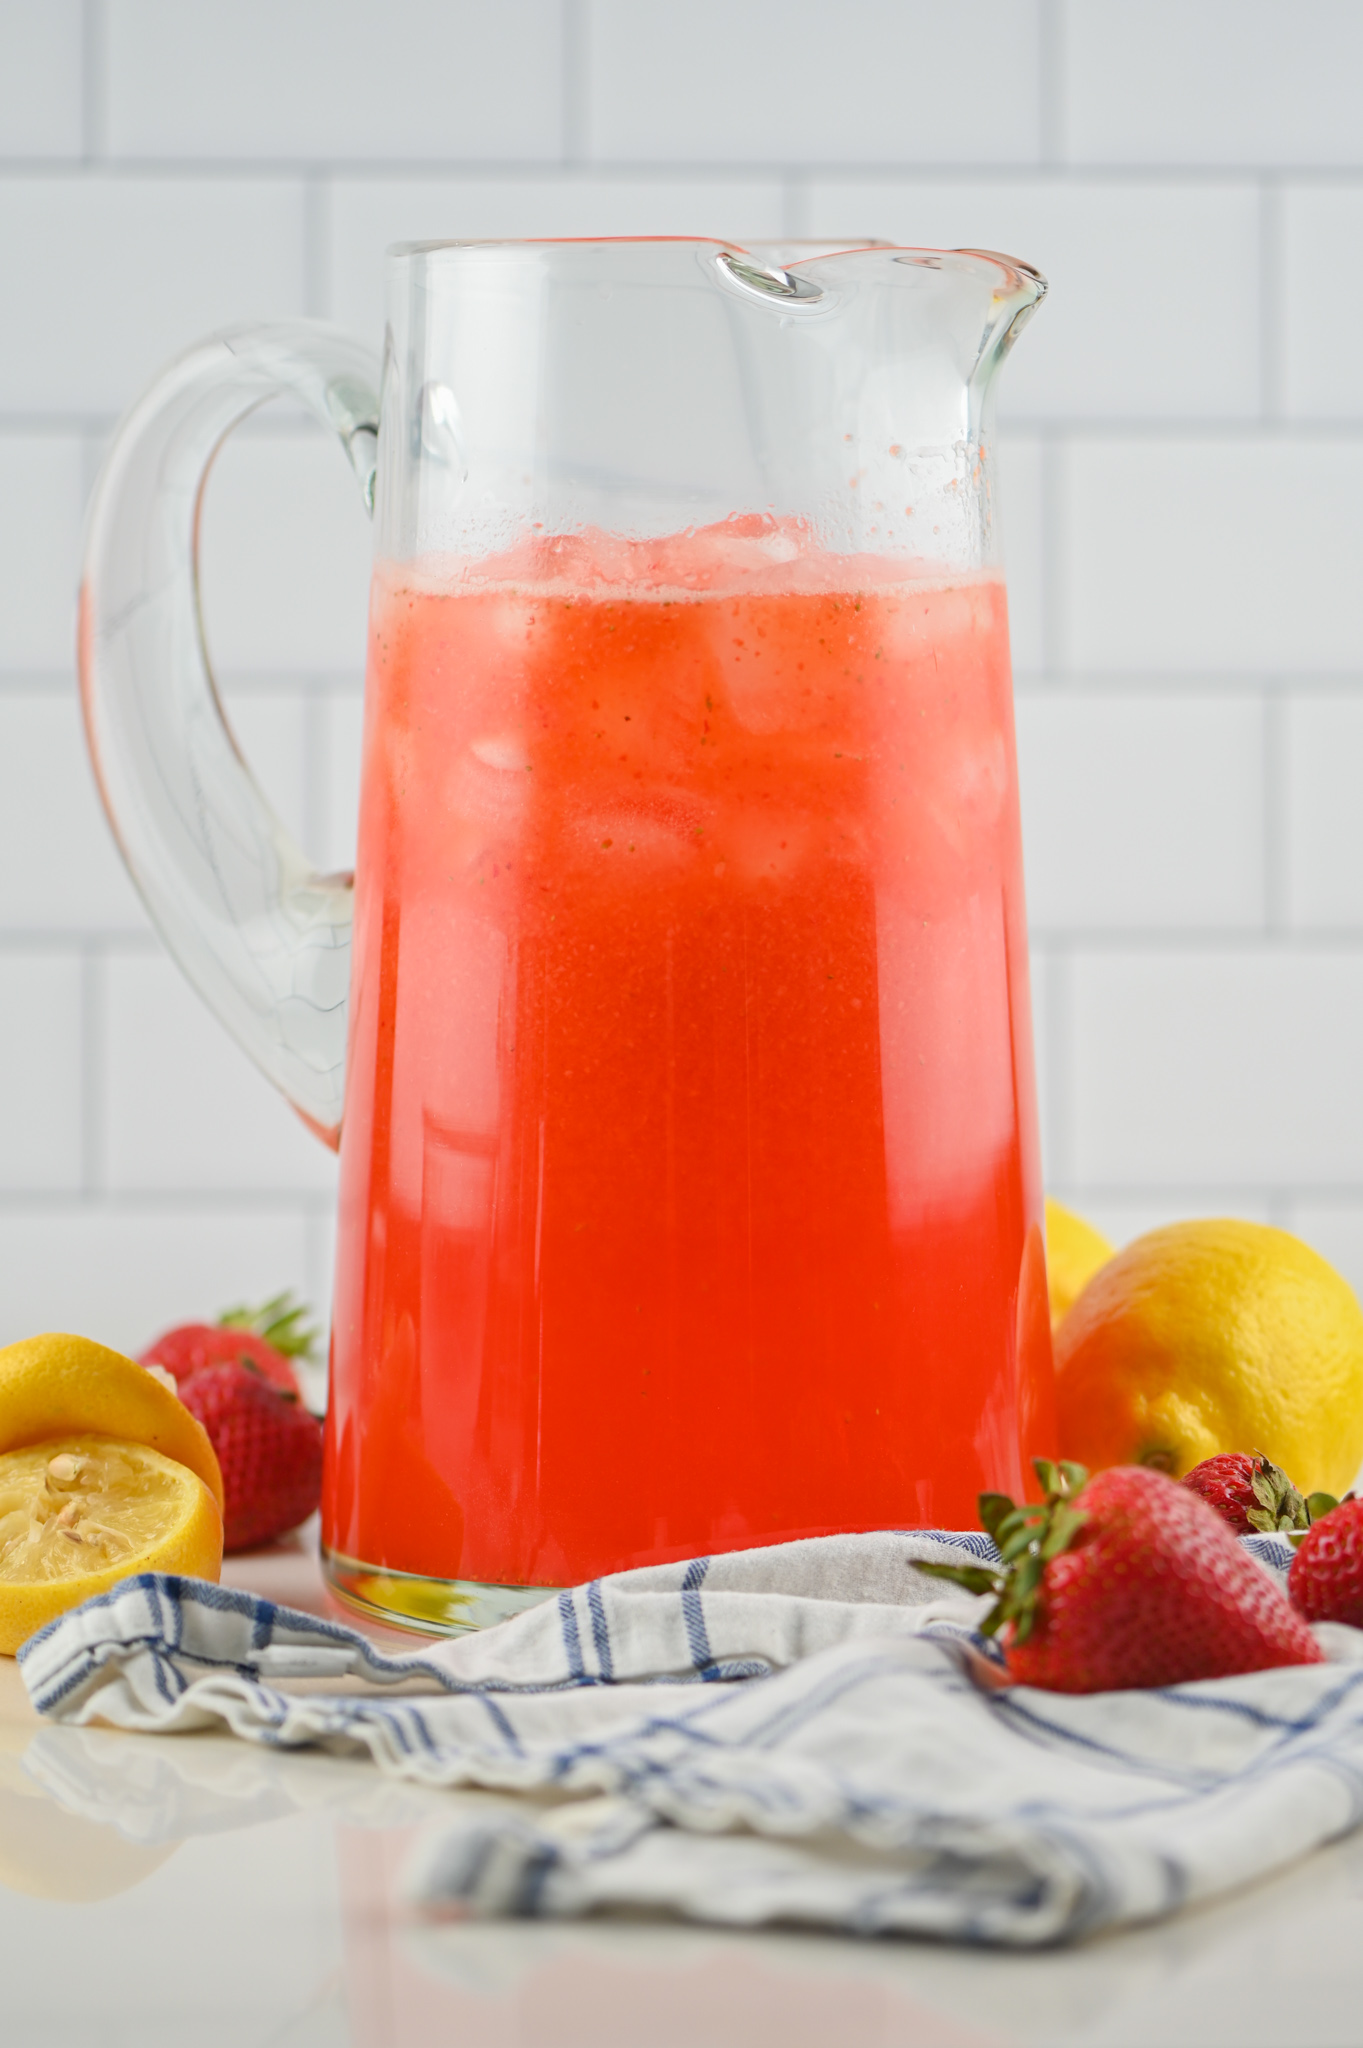 https://www.lifesambrosia.com/wp-content/uploads/How-to-make-Strawberry-Lemonade-7.jpg